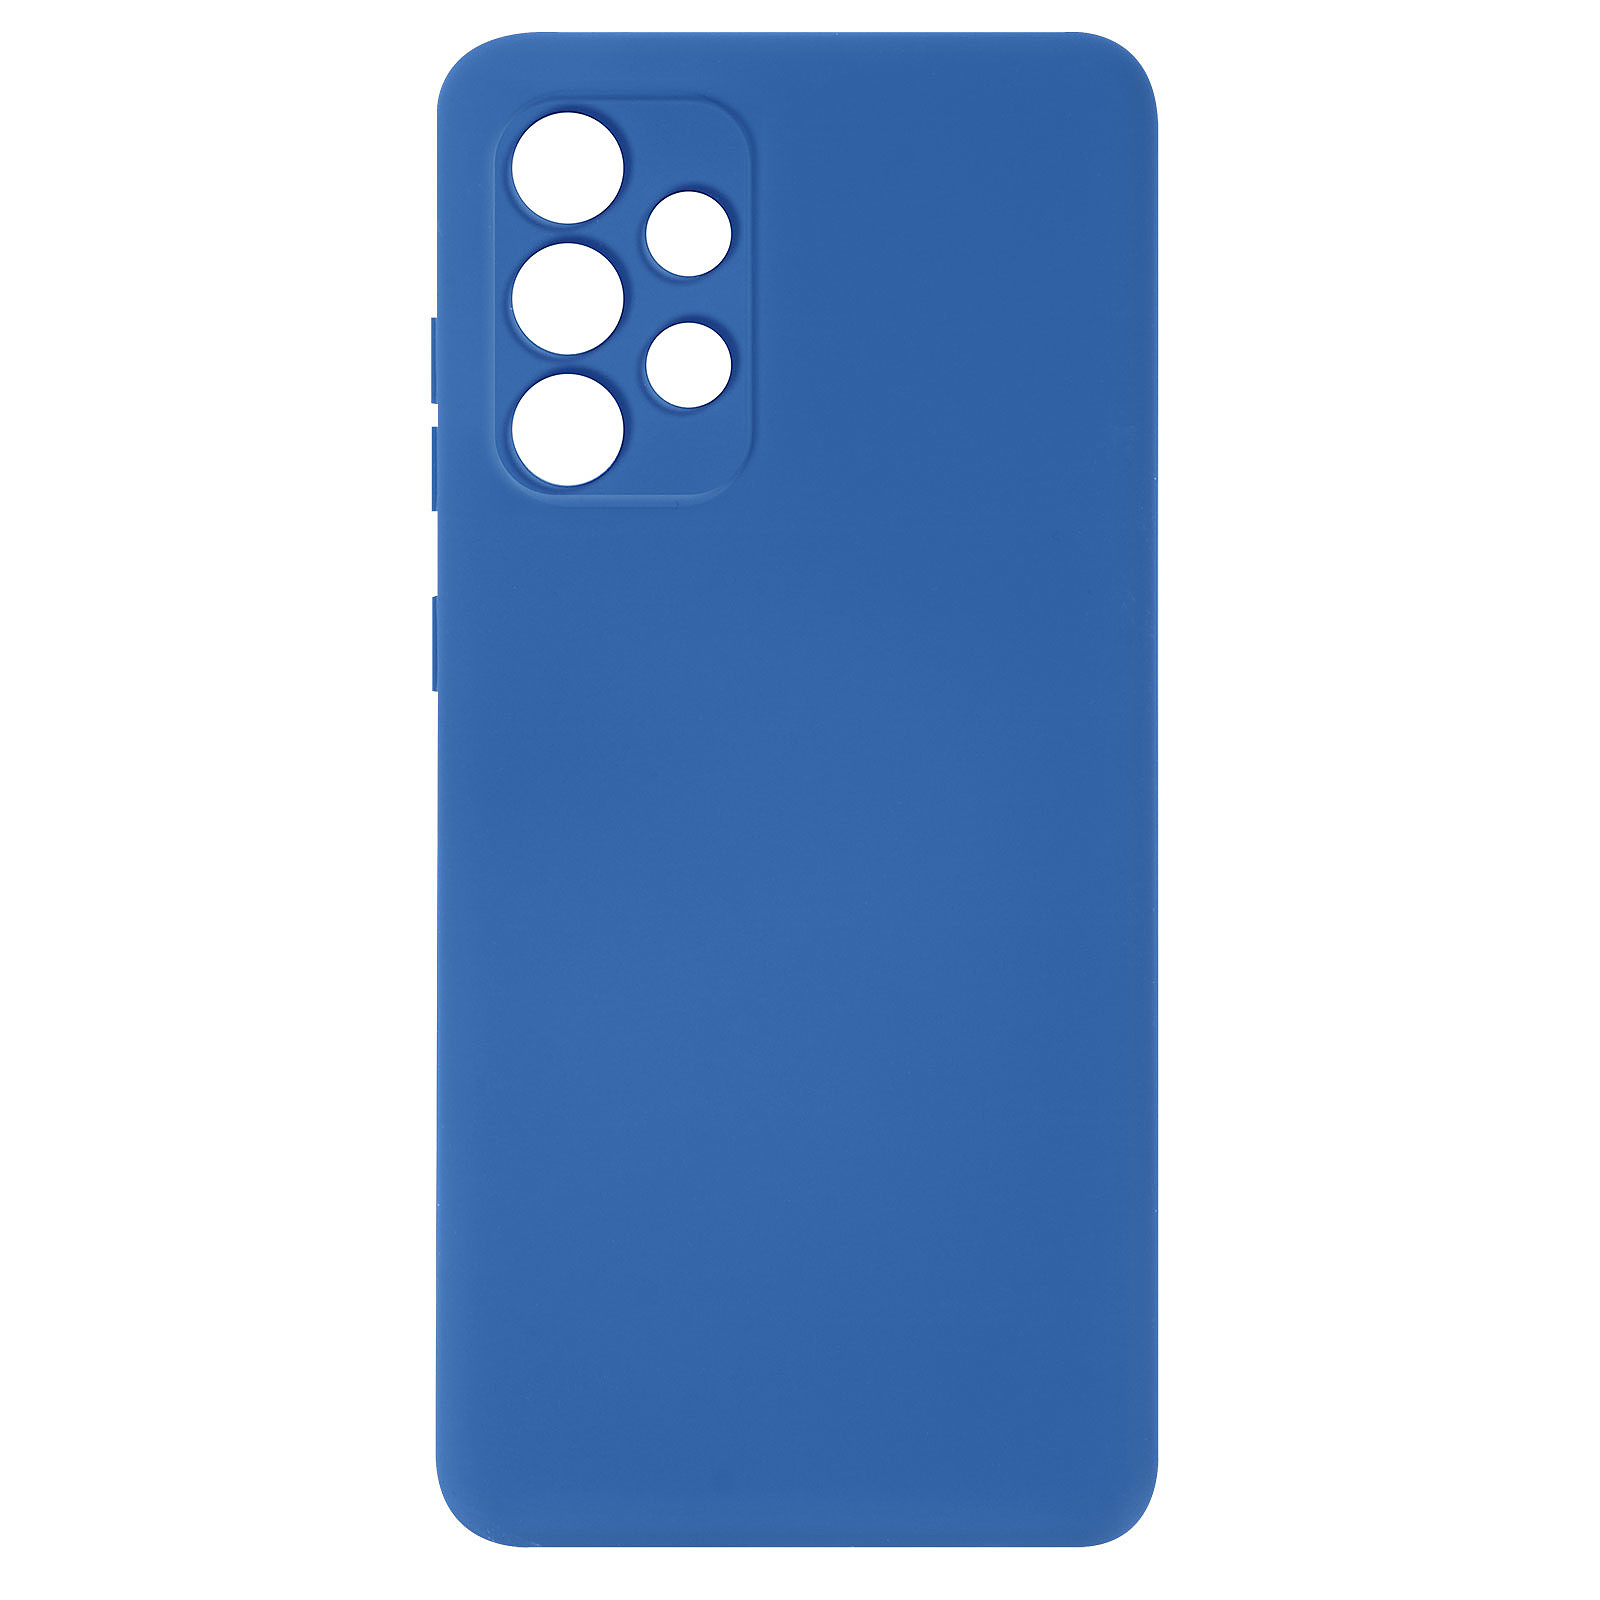 Avizar Coque pour Samsung Galaxy A32 Silicone Semi-rigide Finition Soft Touch Fine Bleu - Coque telephone Avizar